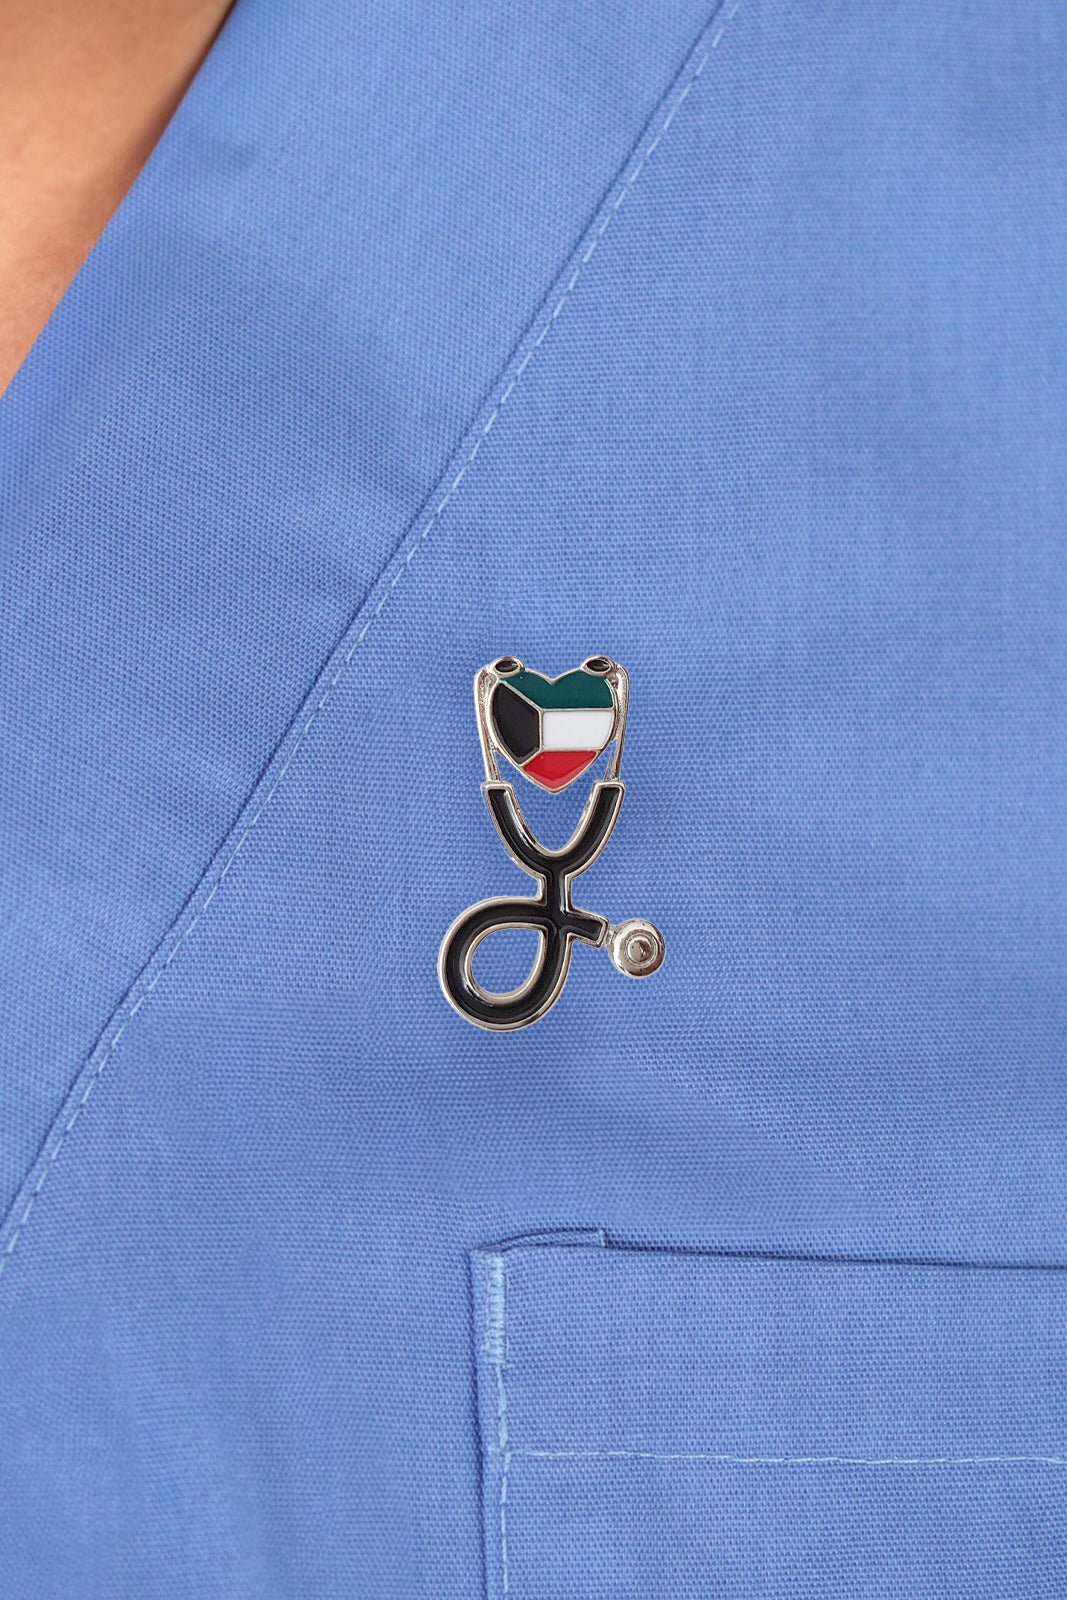 Kuwait Flag Pin